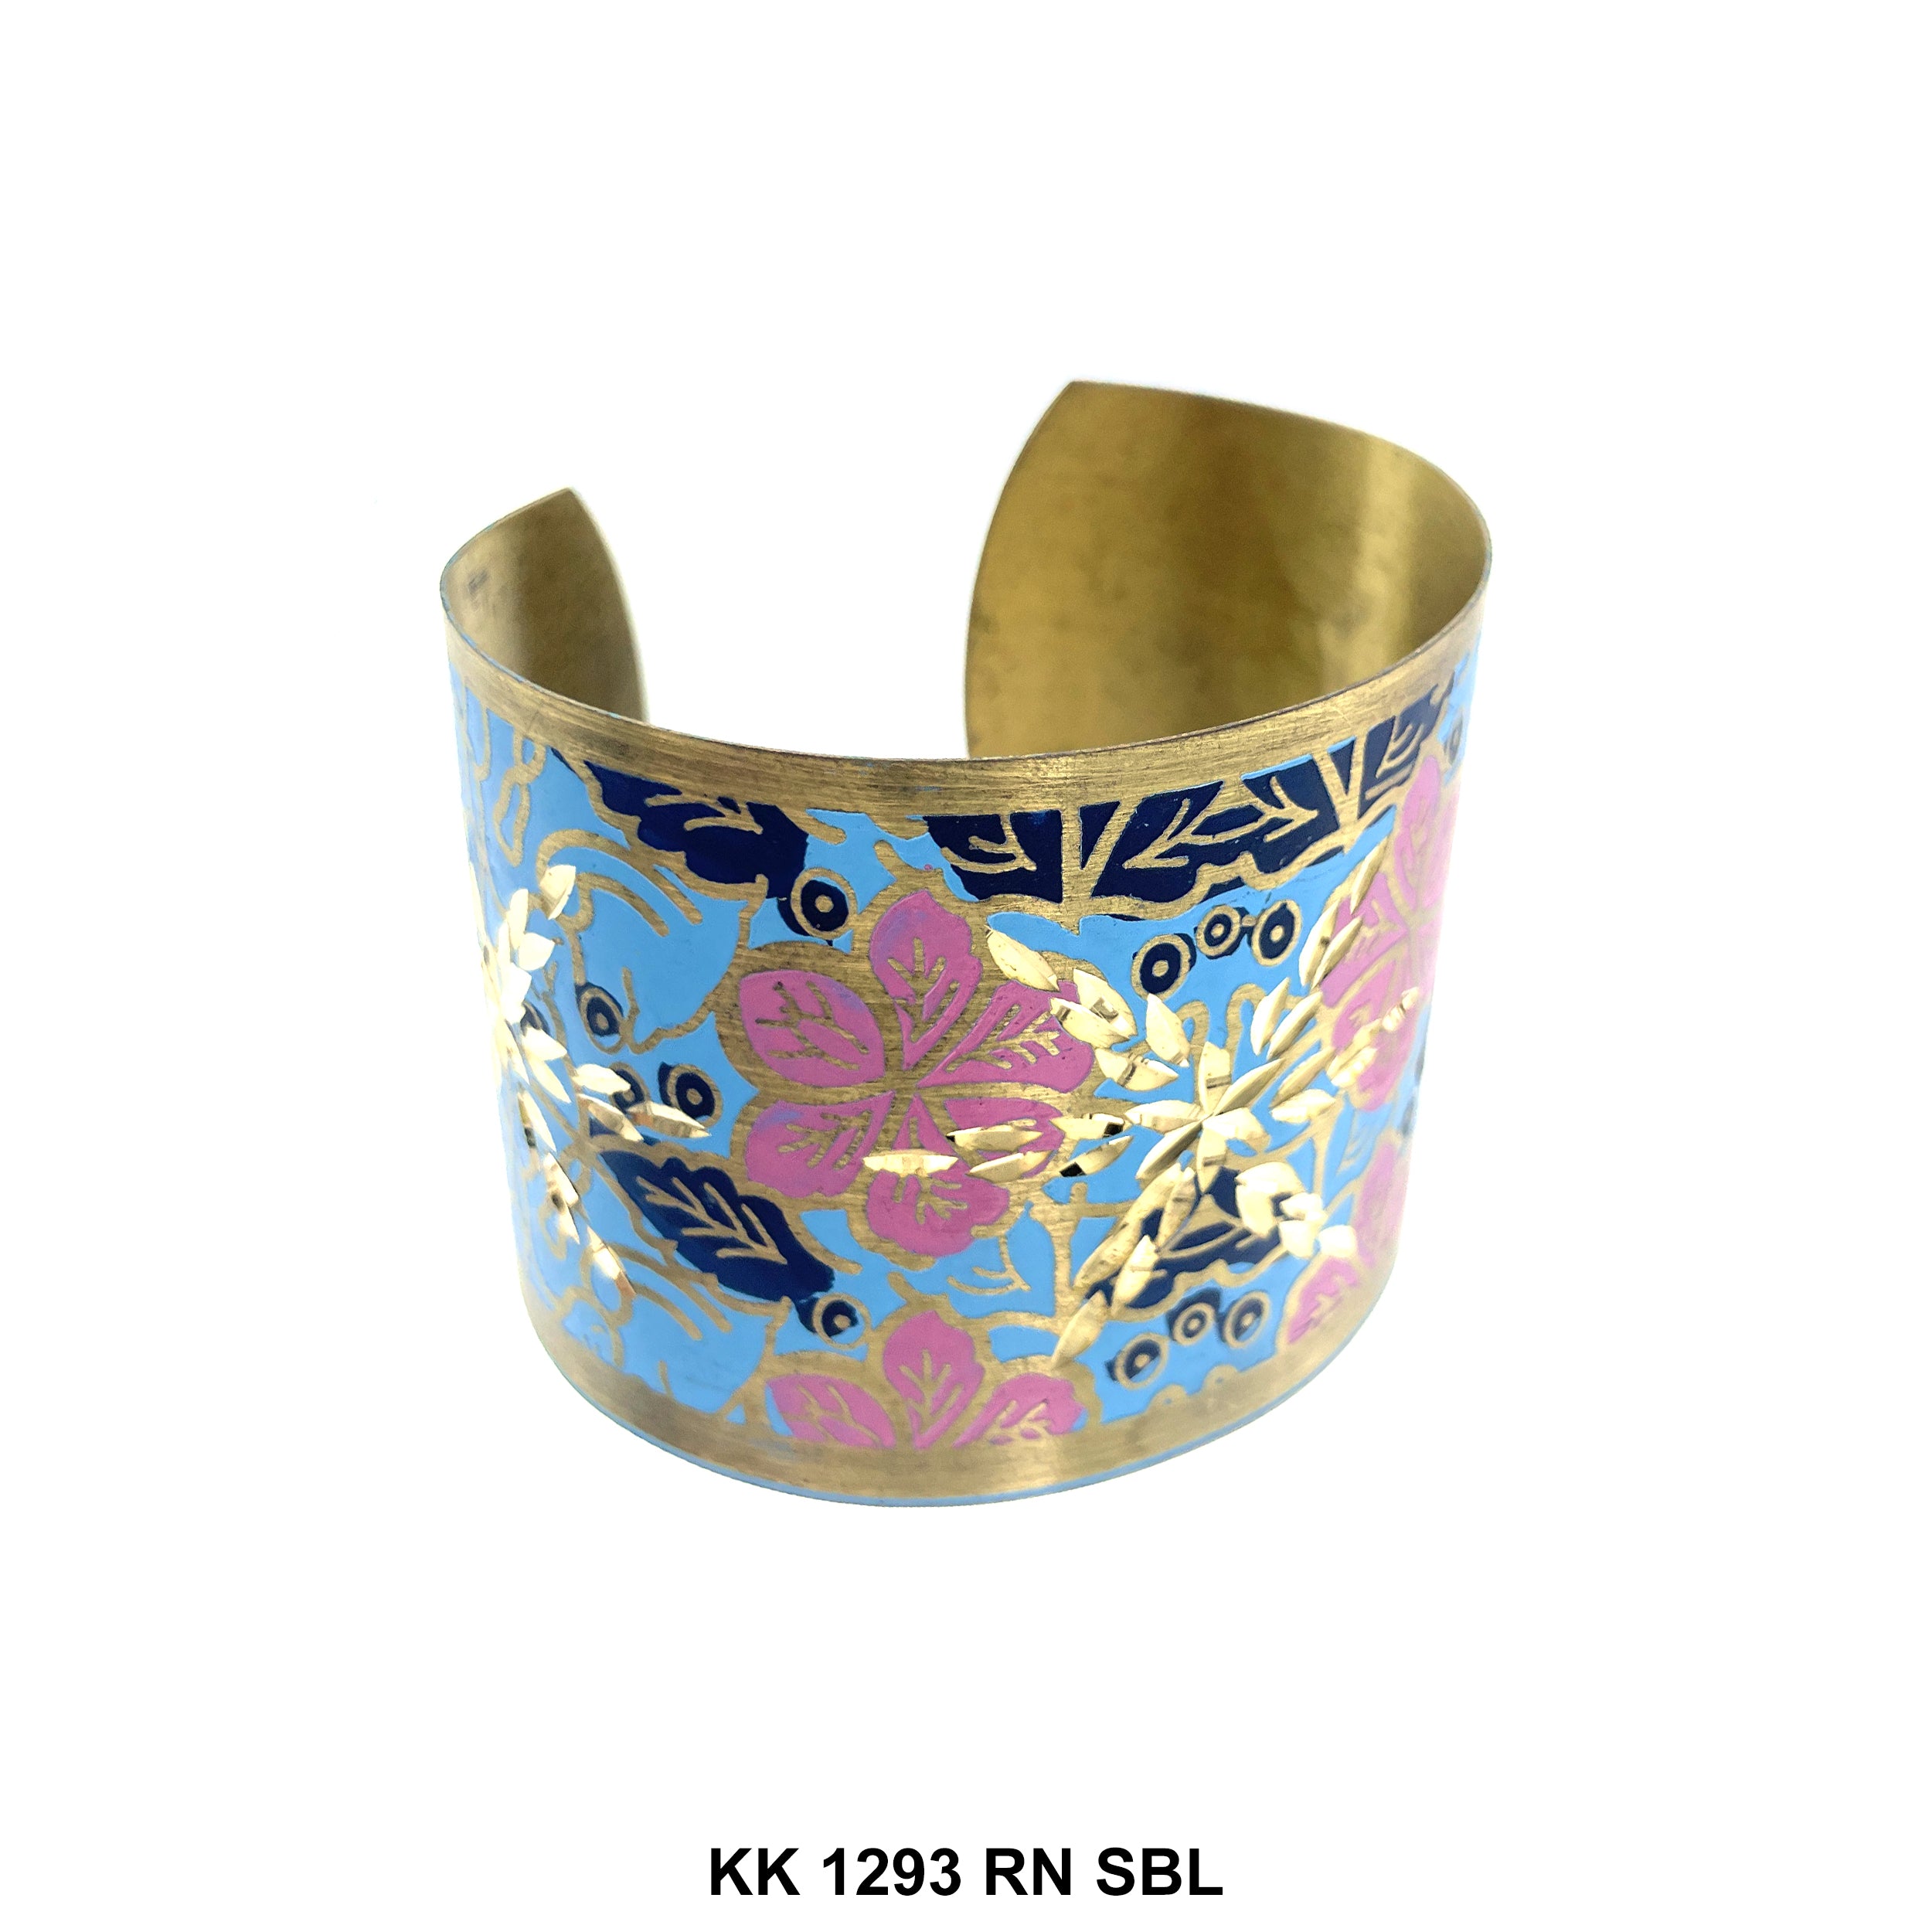 Hand Engraved Cuff Bangle Bracelet KK 1293 RN SBL